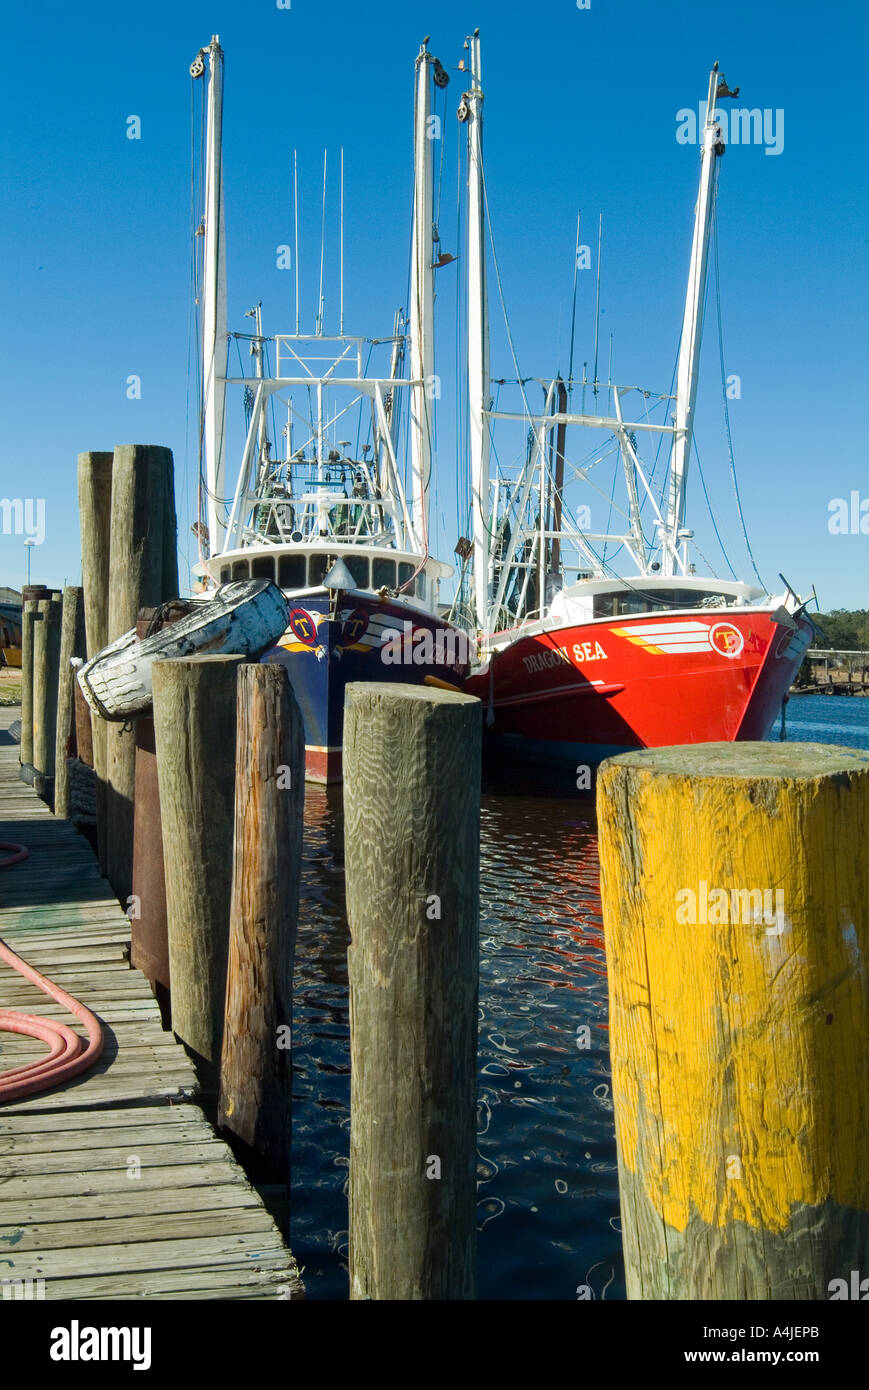 Bayou la Batre, Alabama - Jetty and fishing boats. Stock Photo